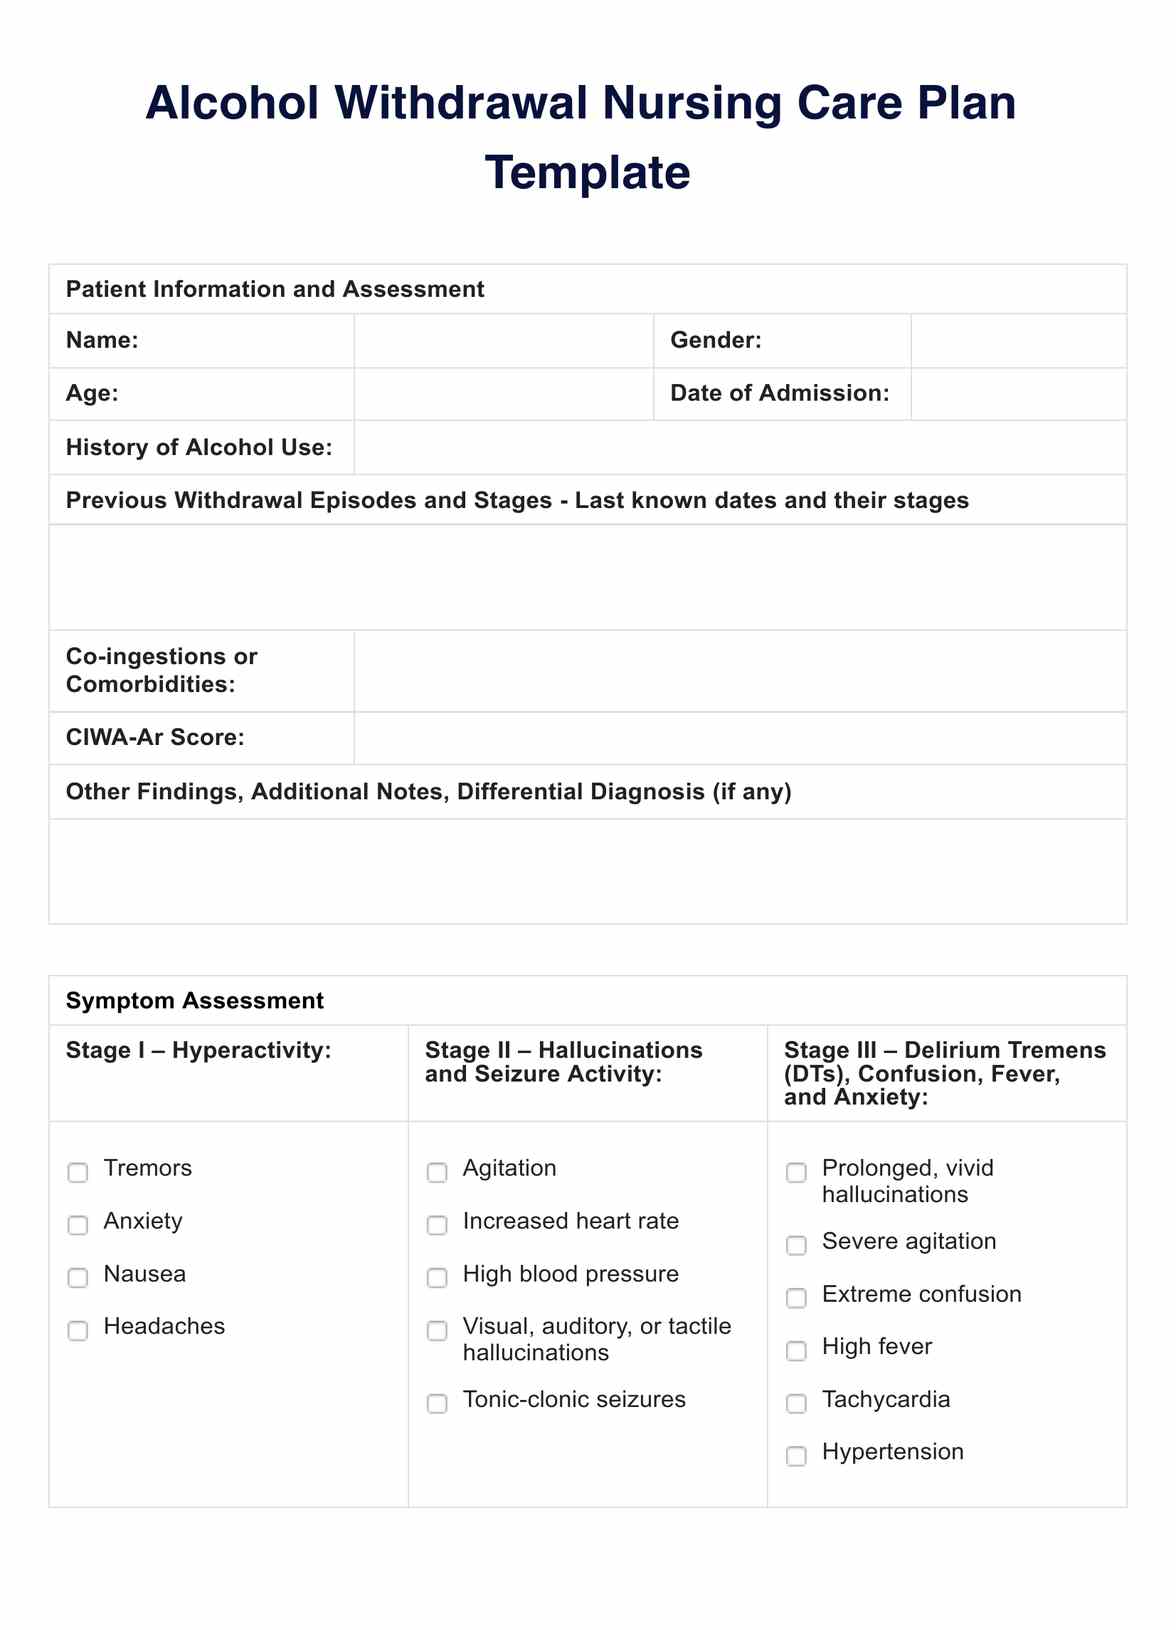 Alcohol Withdrawal Nursing Care Plan PDF Example